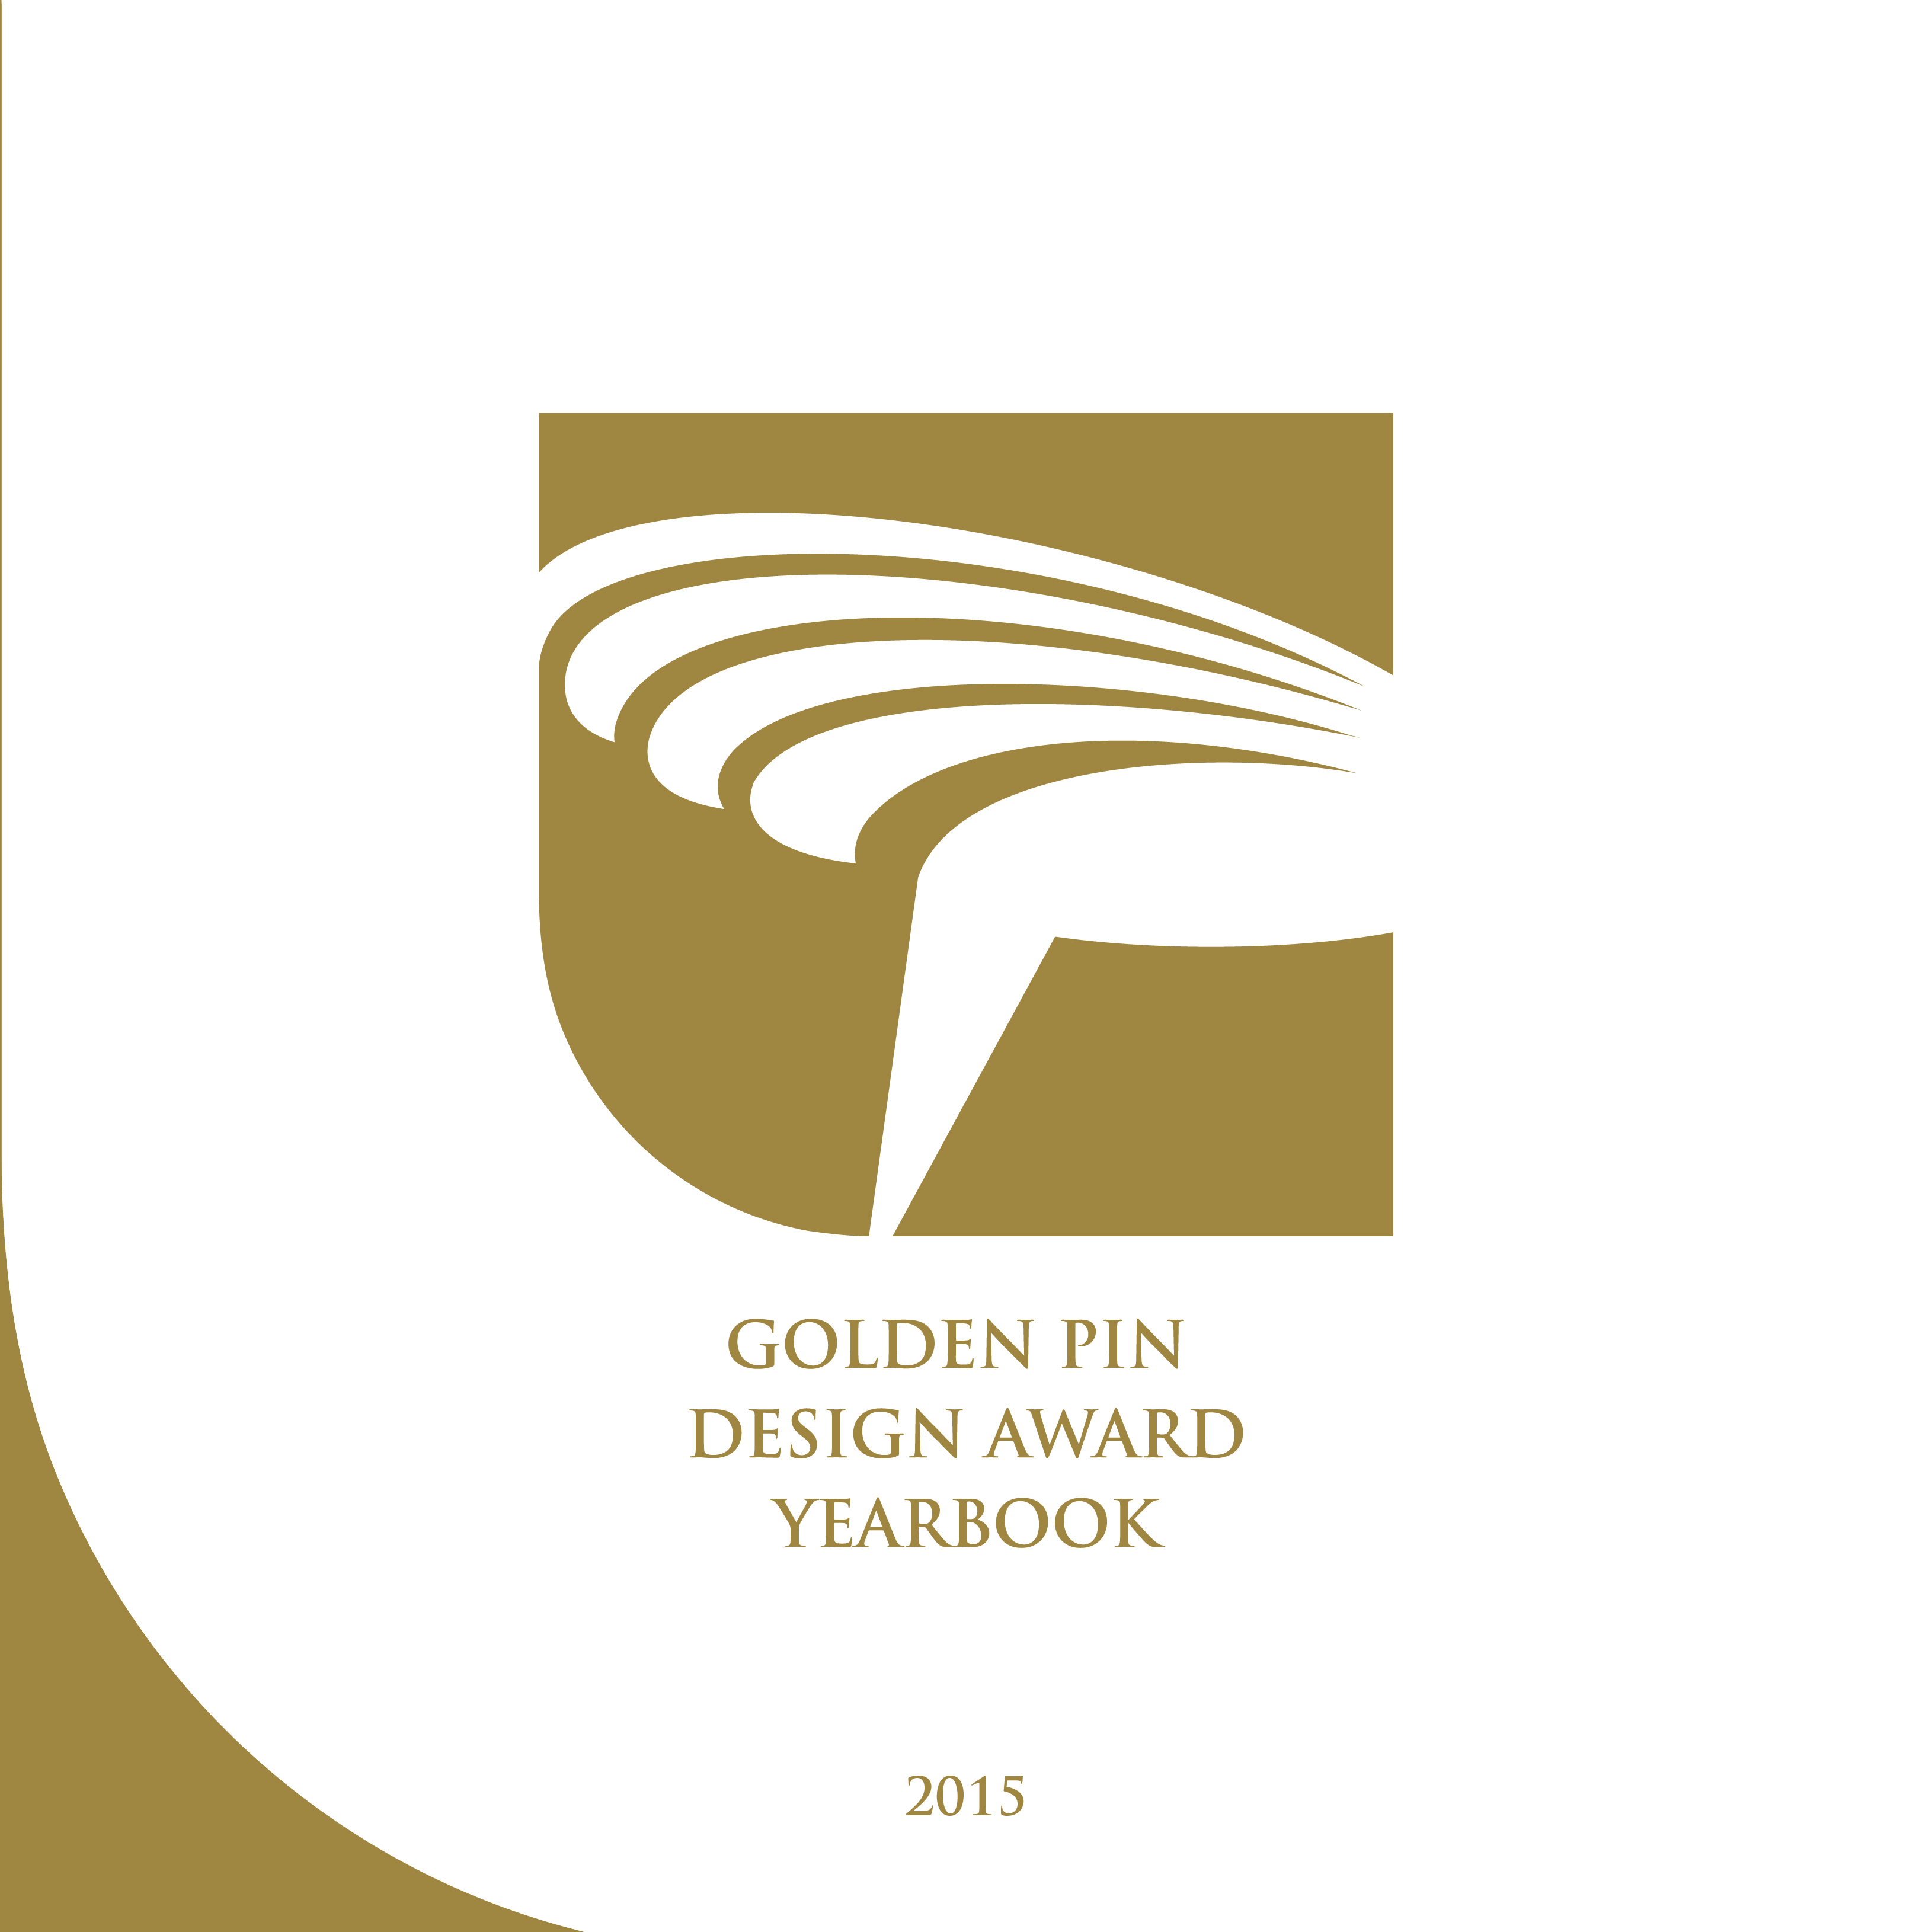   Golden Pin Design Award Yearbook 2015金點設計獎年鑑